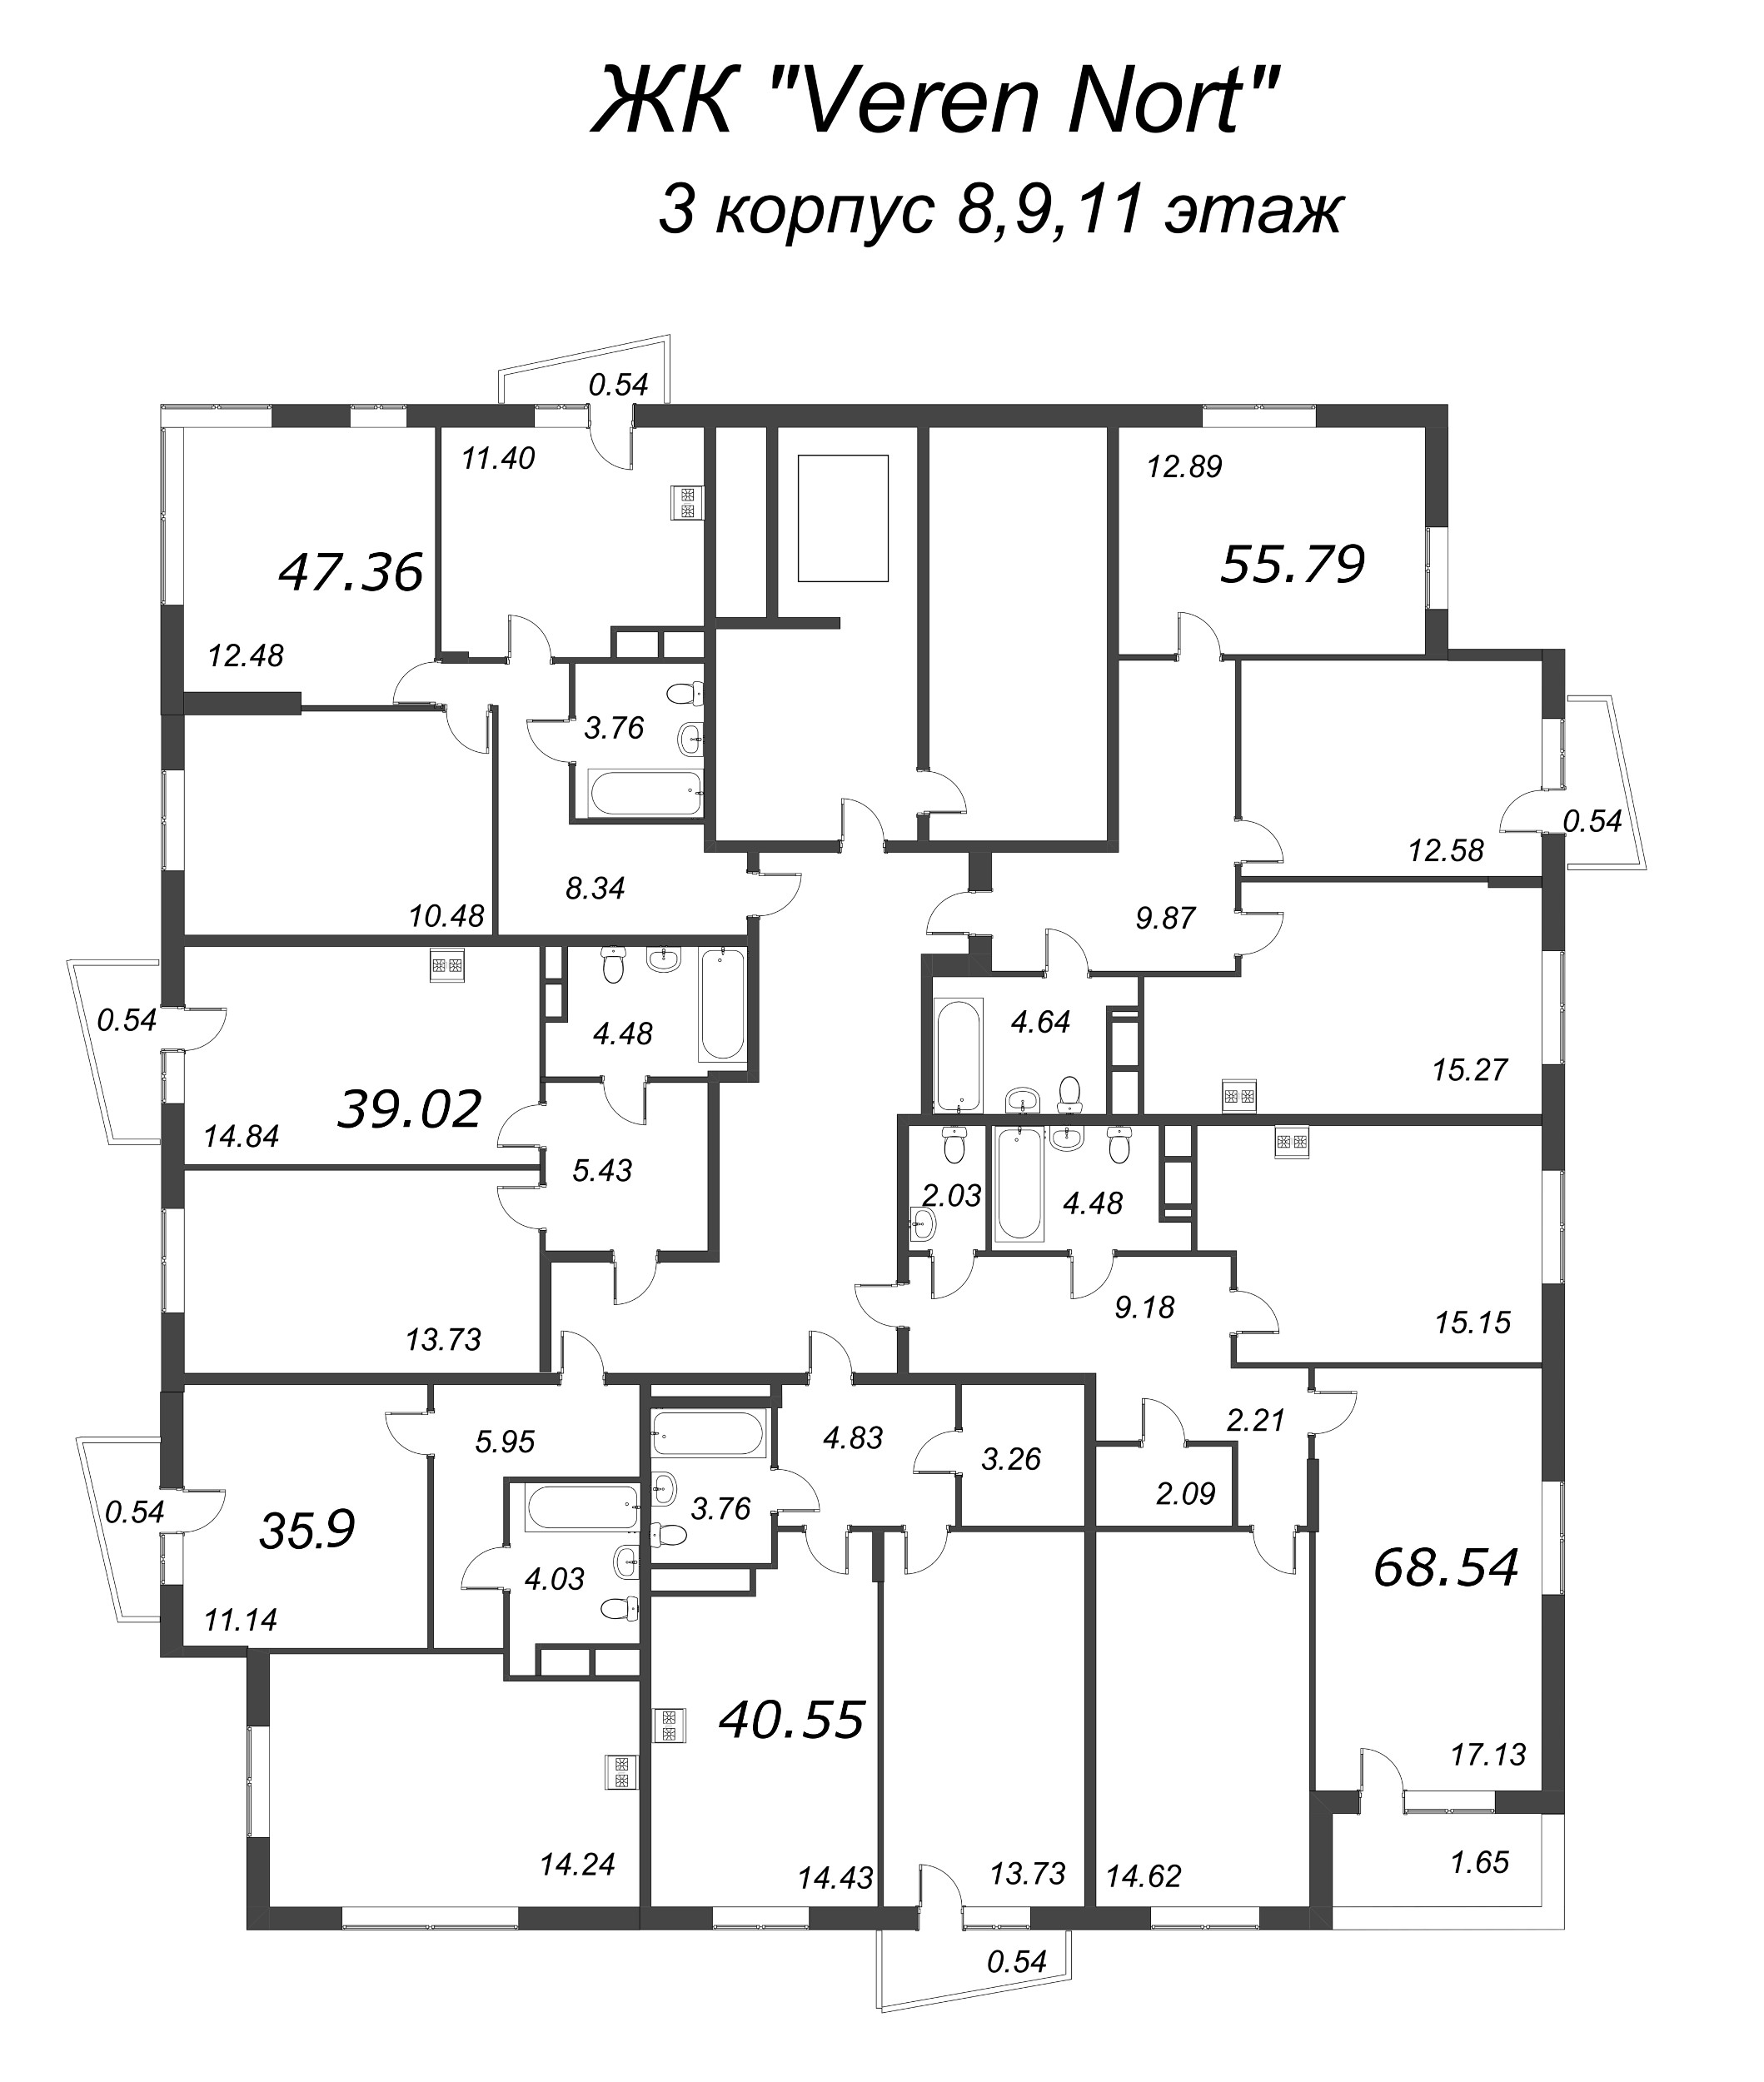 3-комнатная (Евро) квартира, 55.79 м² - планировка этажа